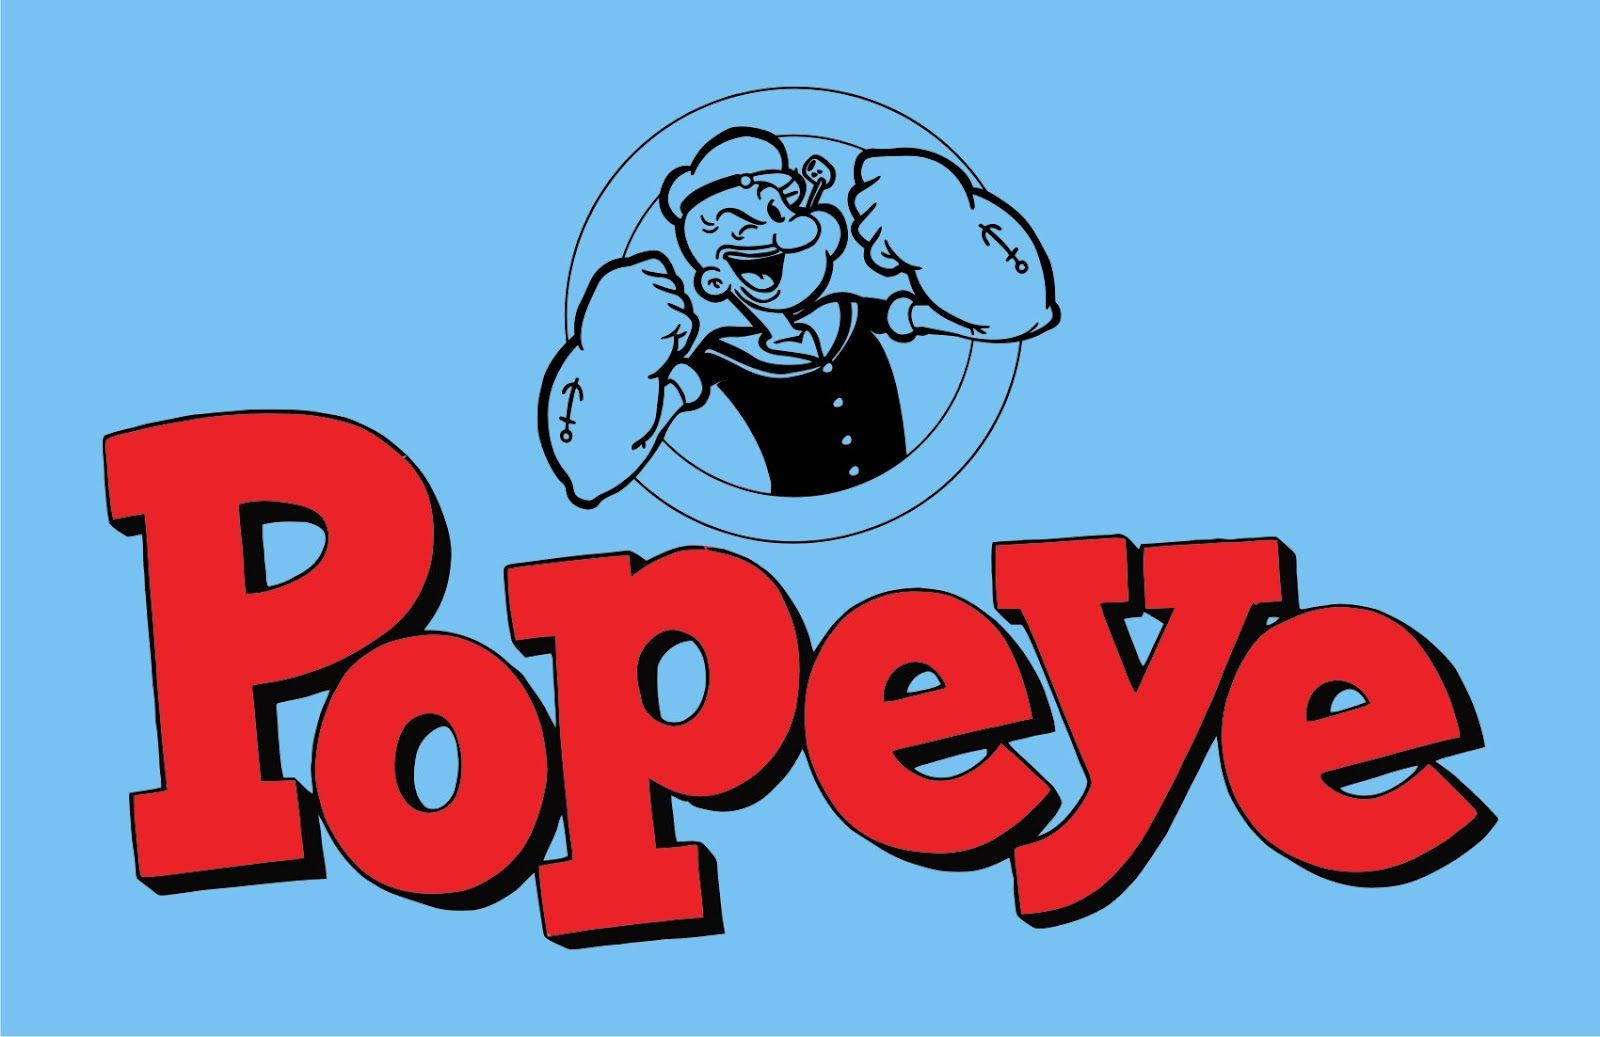 Popeye The Sailor Man Logo Wallpaper